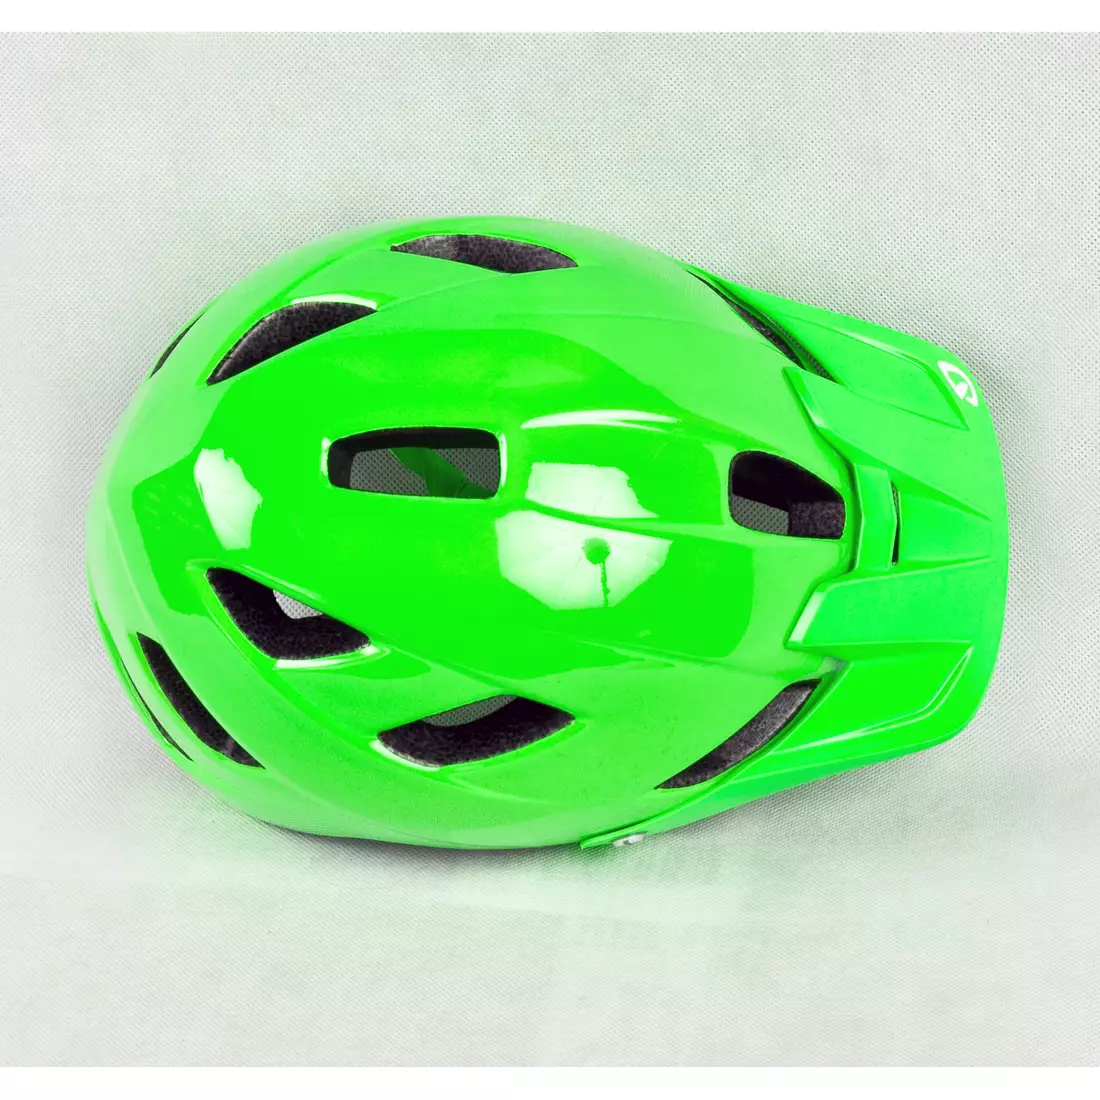 GIRO FEATURE bicycle helmet, green